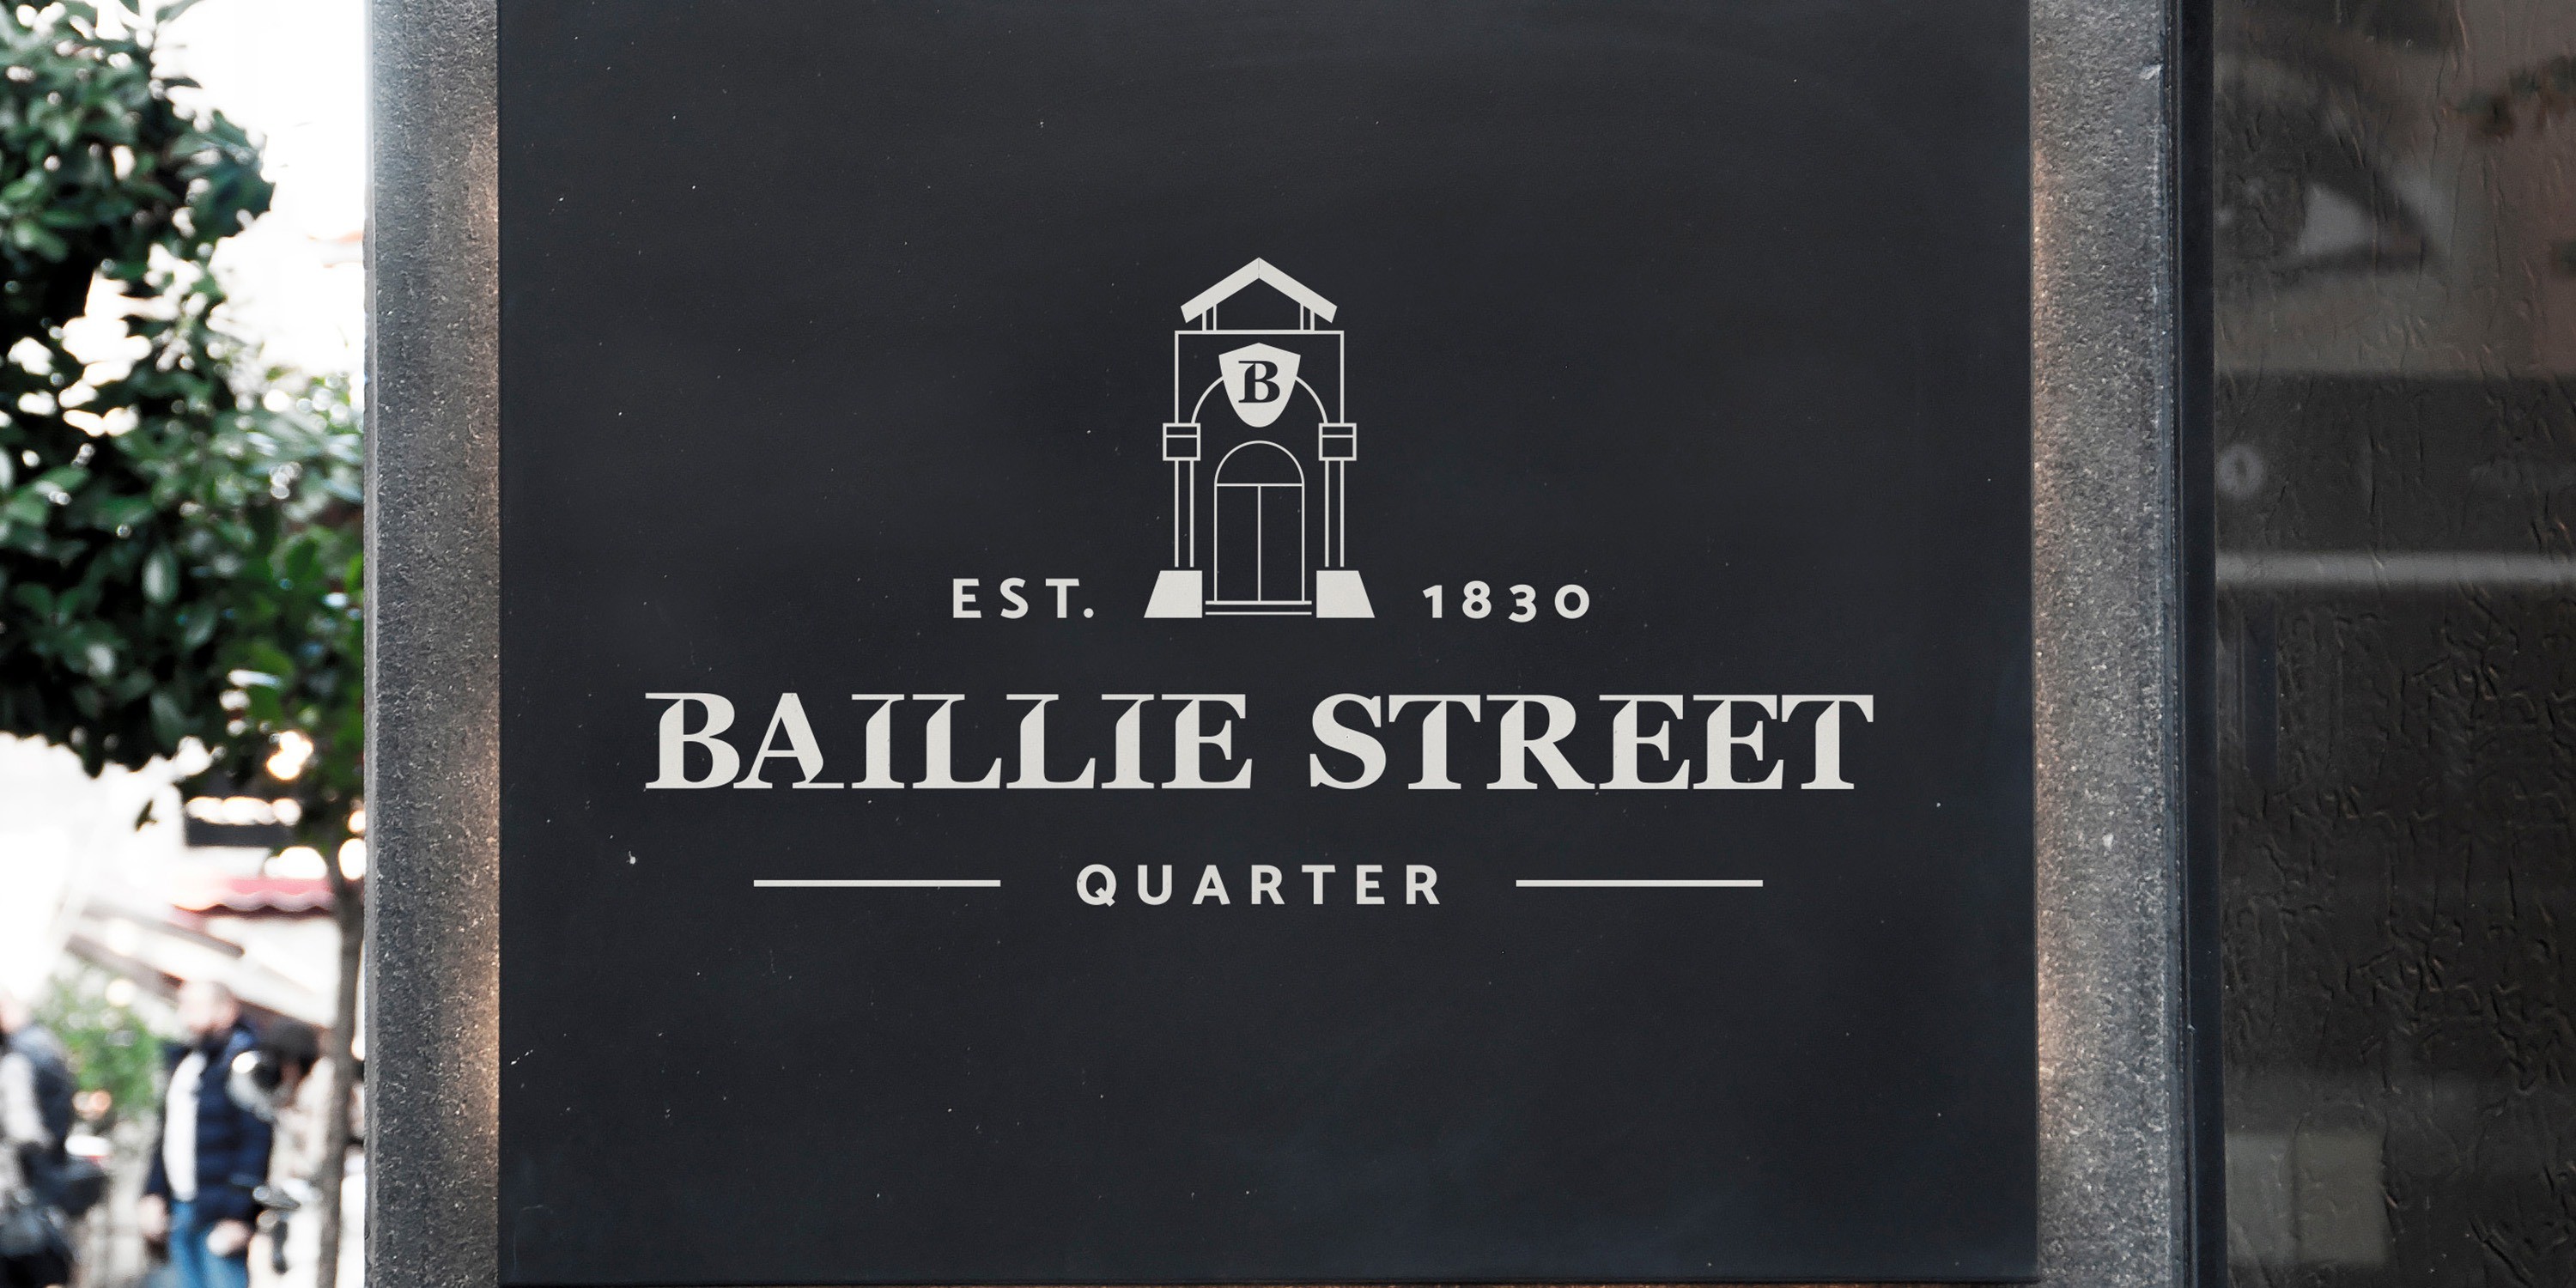 Baillie street quarter in situ large